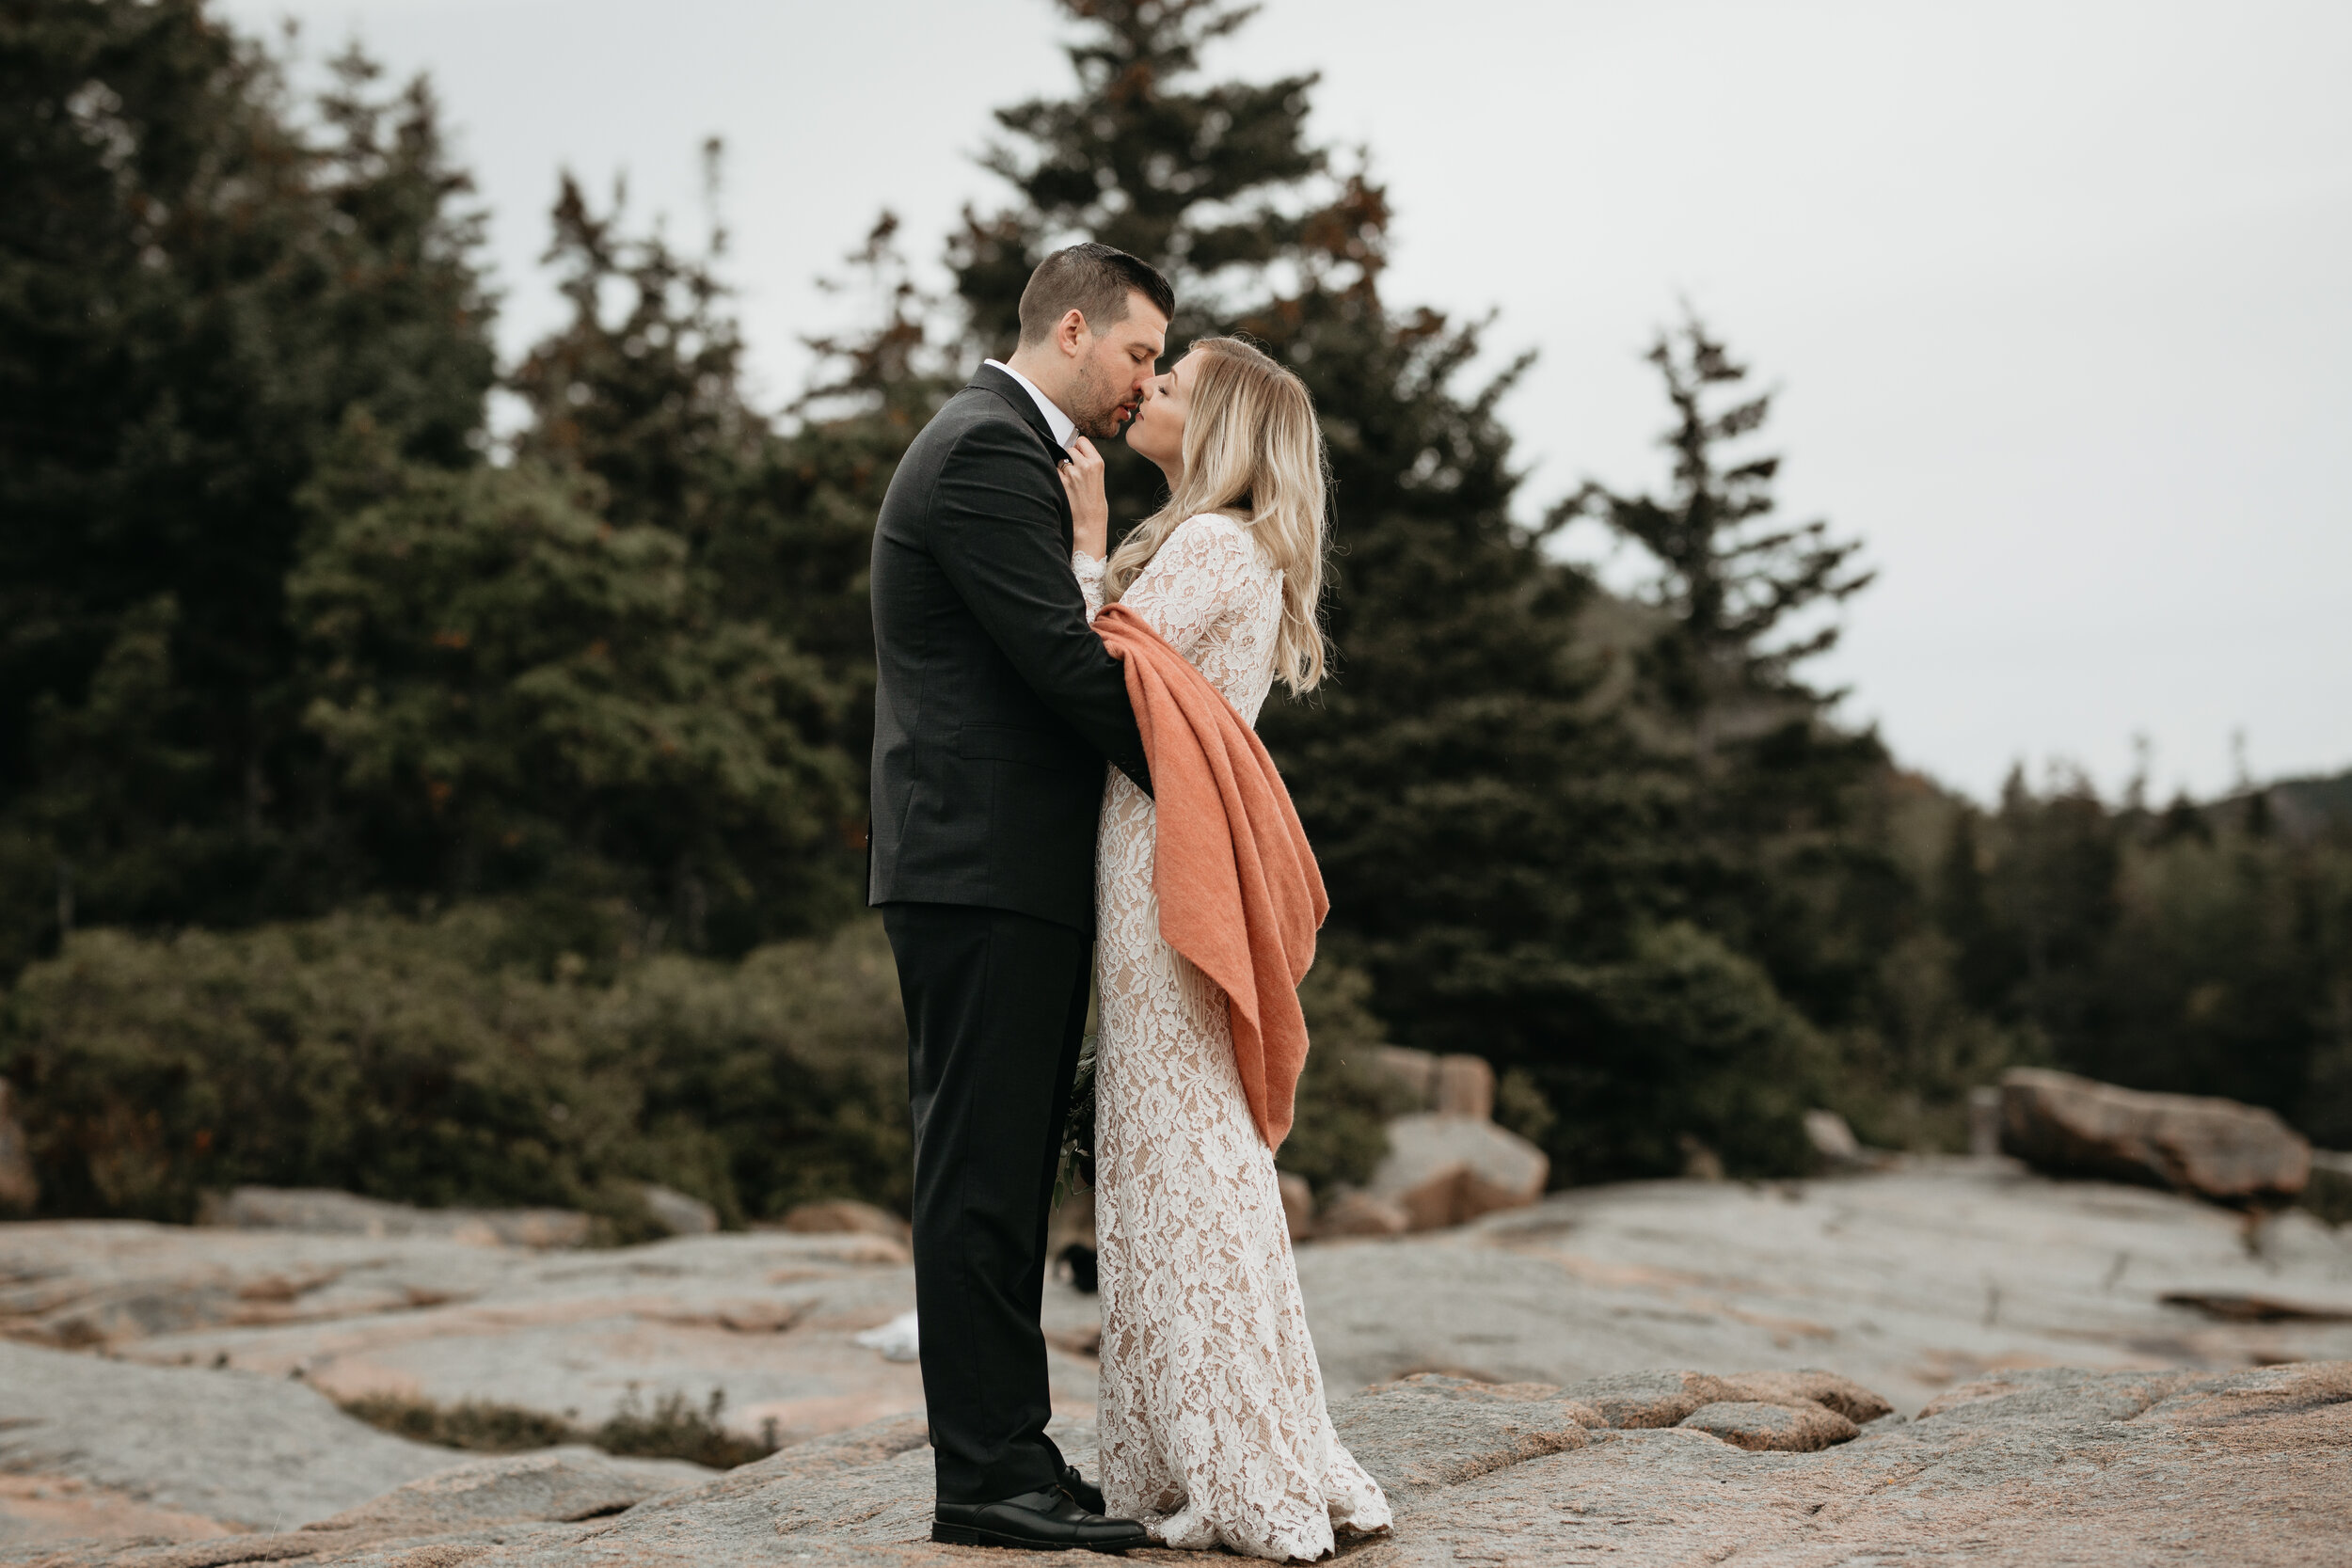 Nicole-Daacke-Photography-Acadia-national-park-elopement-photography-elopement-in-acadia-inspiration-maine-intimate-wedding-destination-elopement-photographer-rainy-day-maine-coast-bar-harbor-elopement-photography-150.jpg